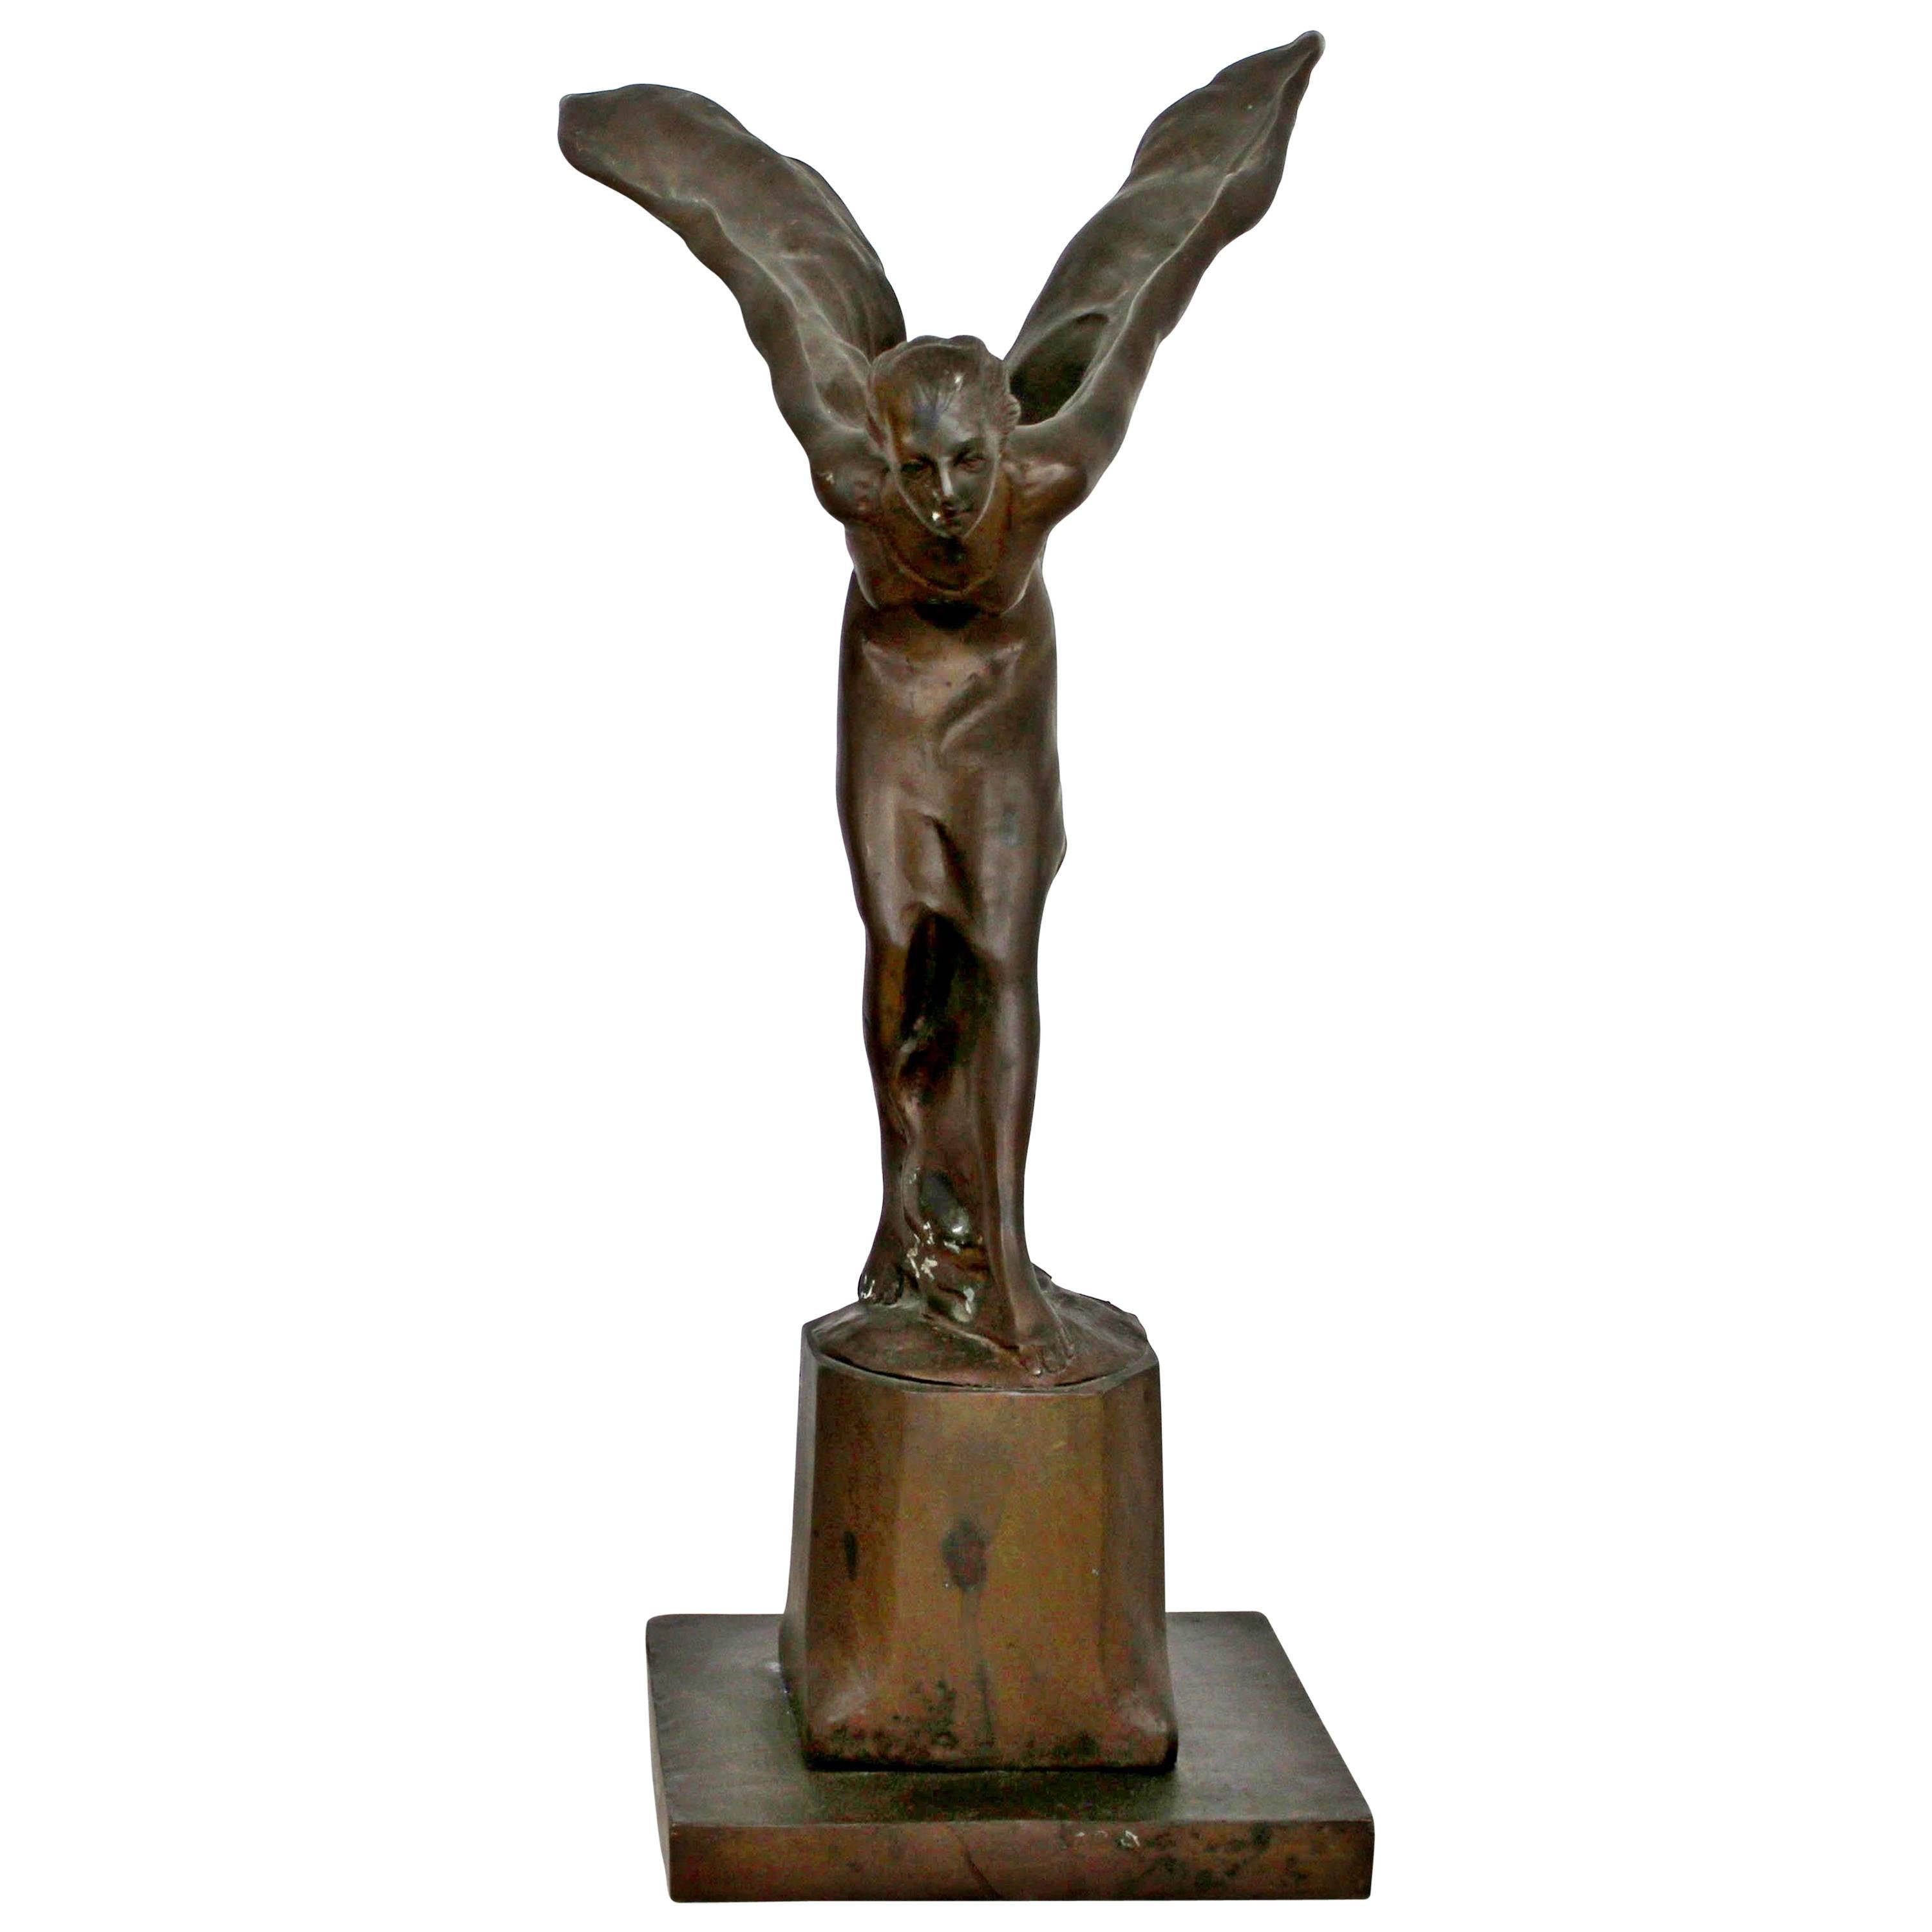 Art Deco Bronze Table Sculpture Spirit of Ecstasy Charles Sykes for Rolls Royce